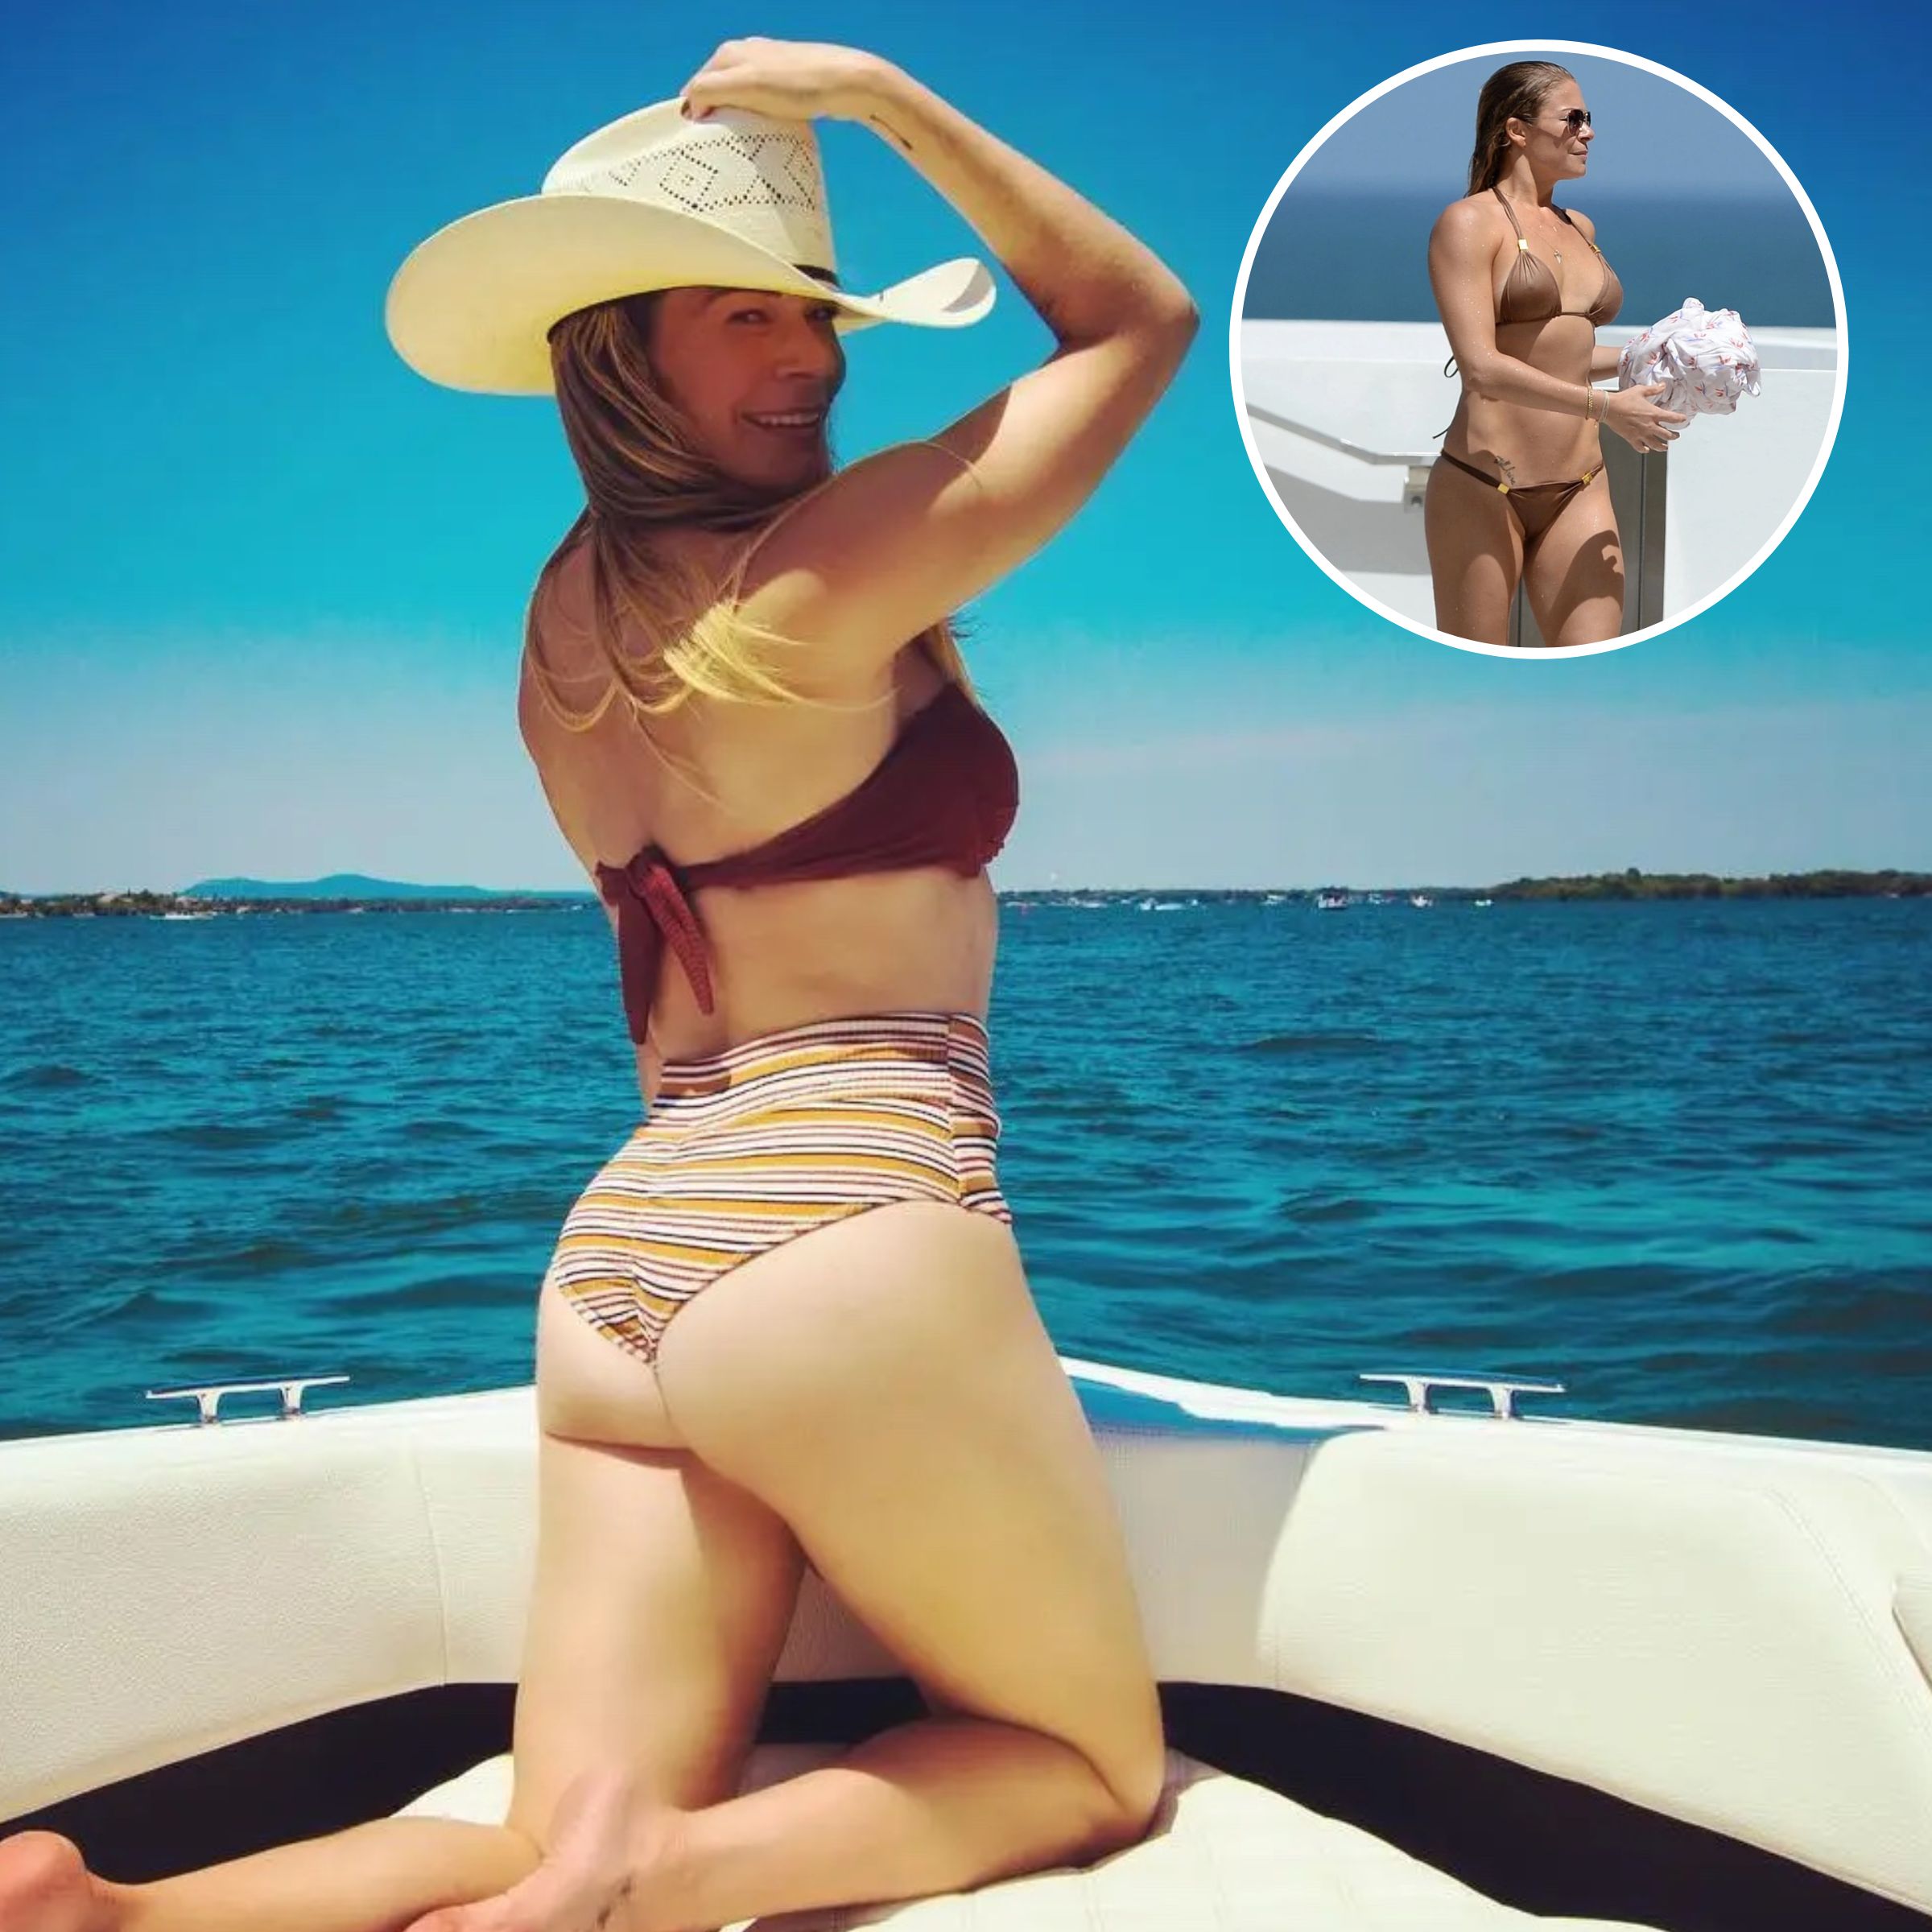 LeAnn Rimes Bikini Pictures: Her Sexy Swimsuit Photos